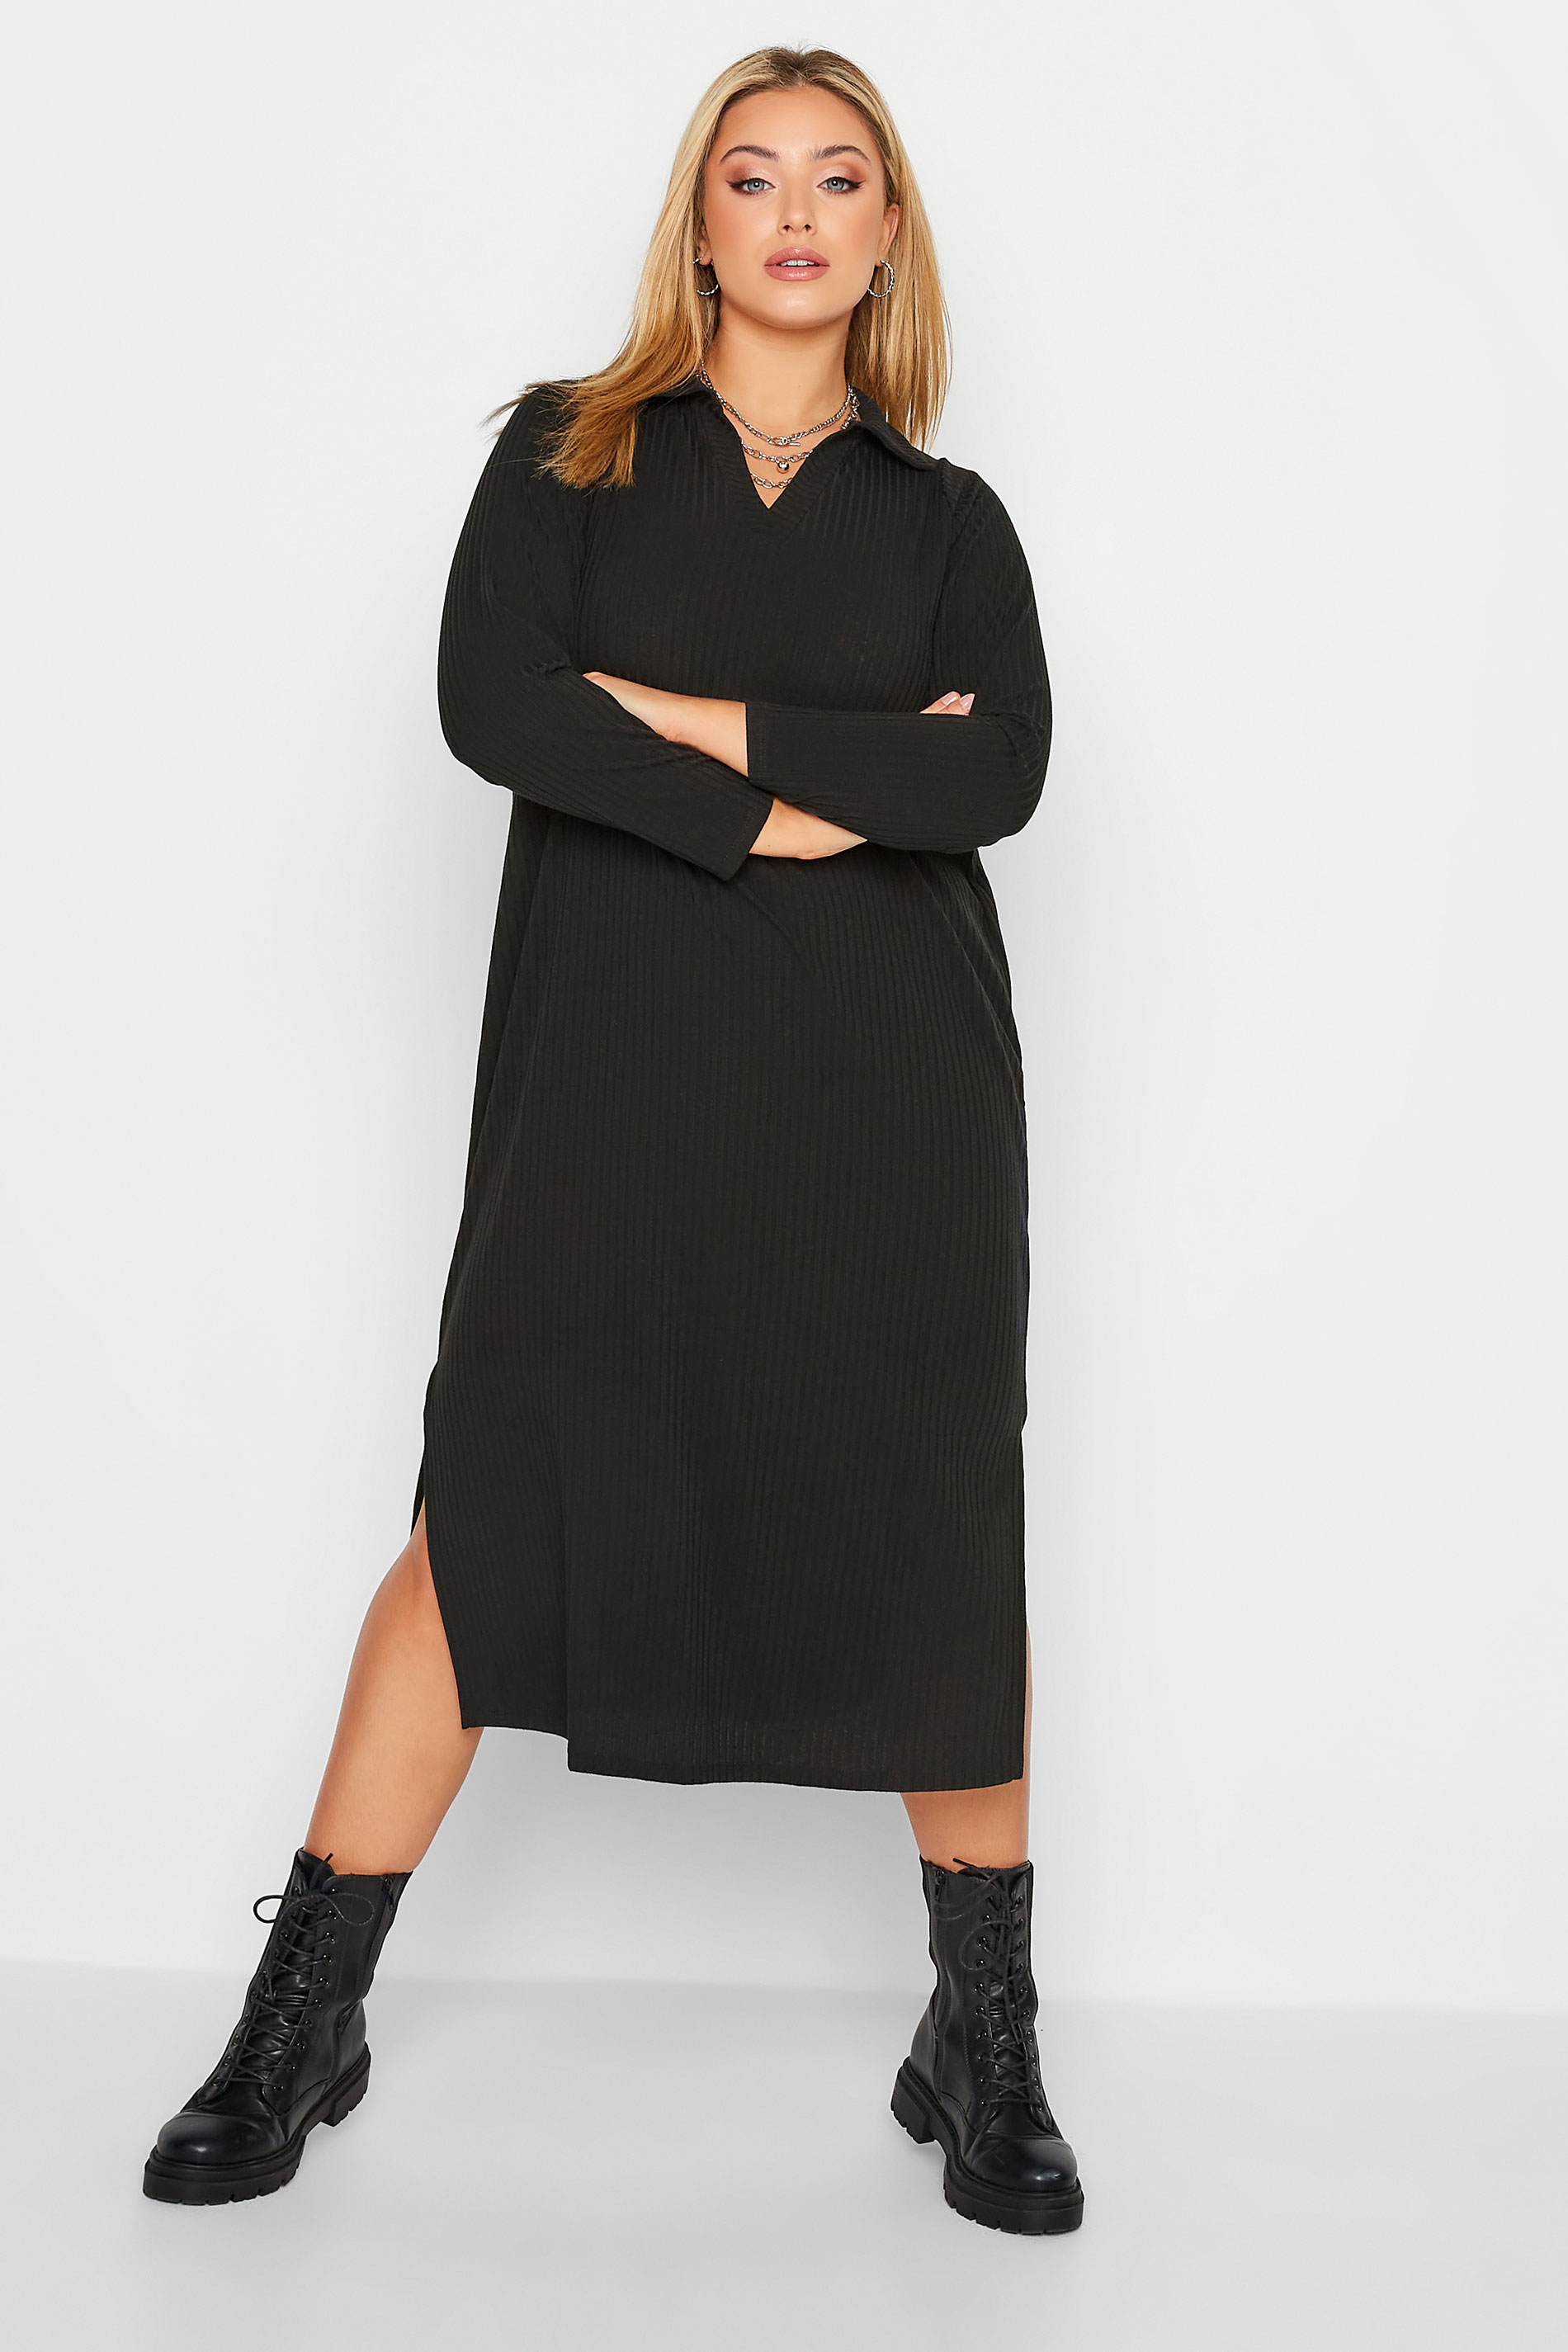 Curve Plus Size Black Ribbed Spilt Sides Midi Dress | Yours Clothing 1